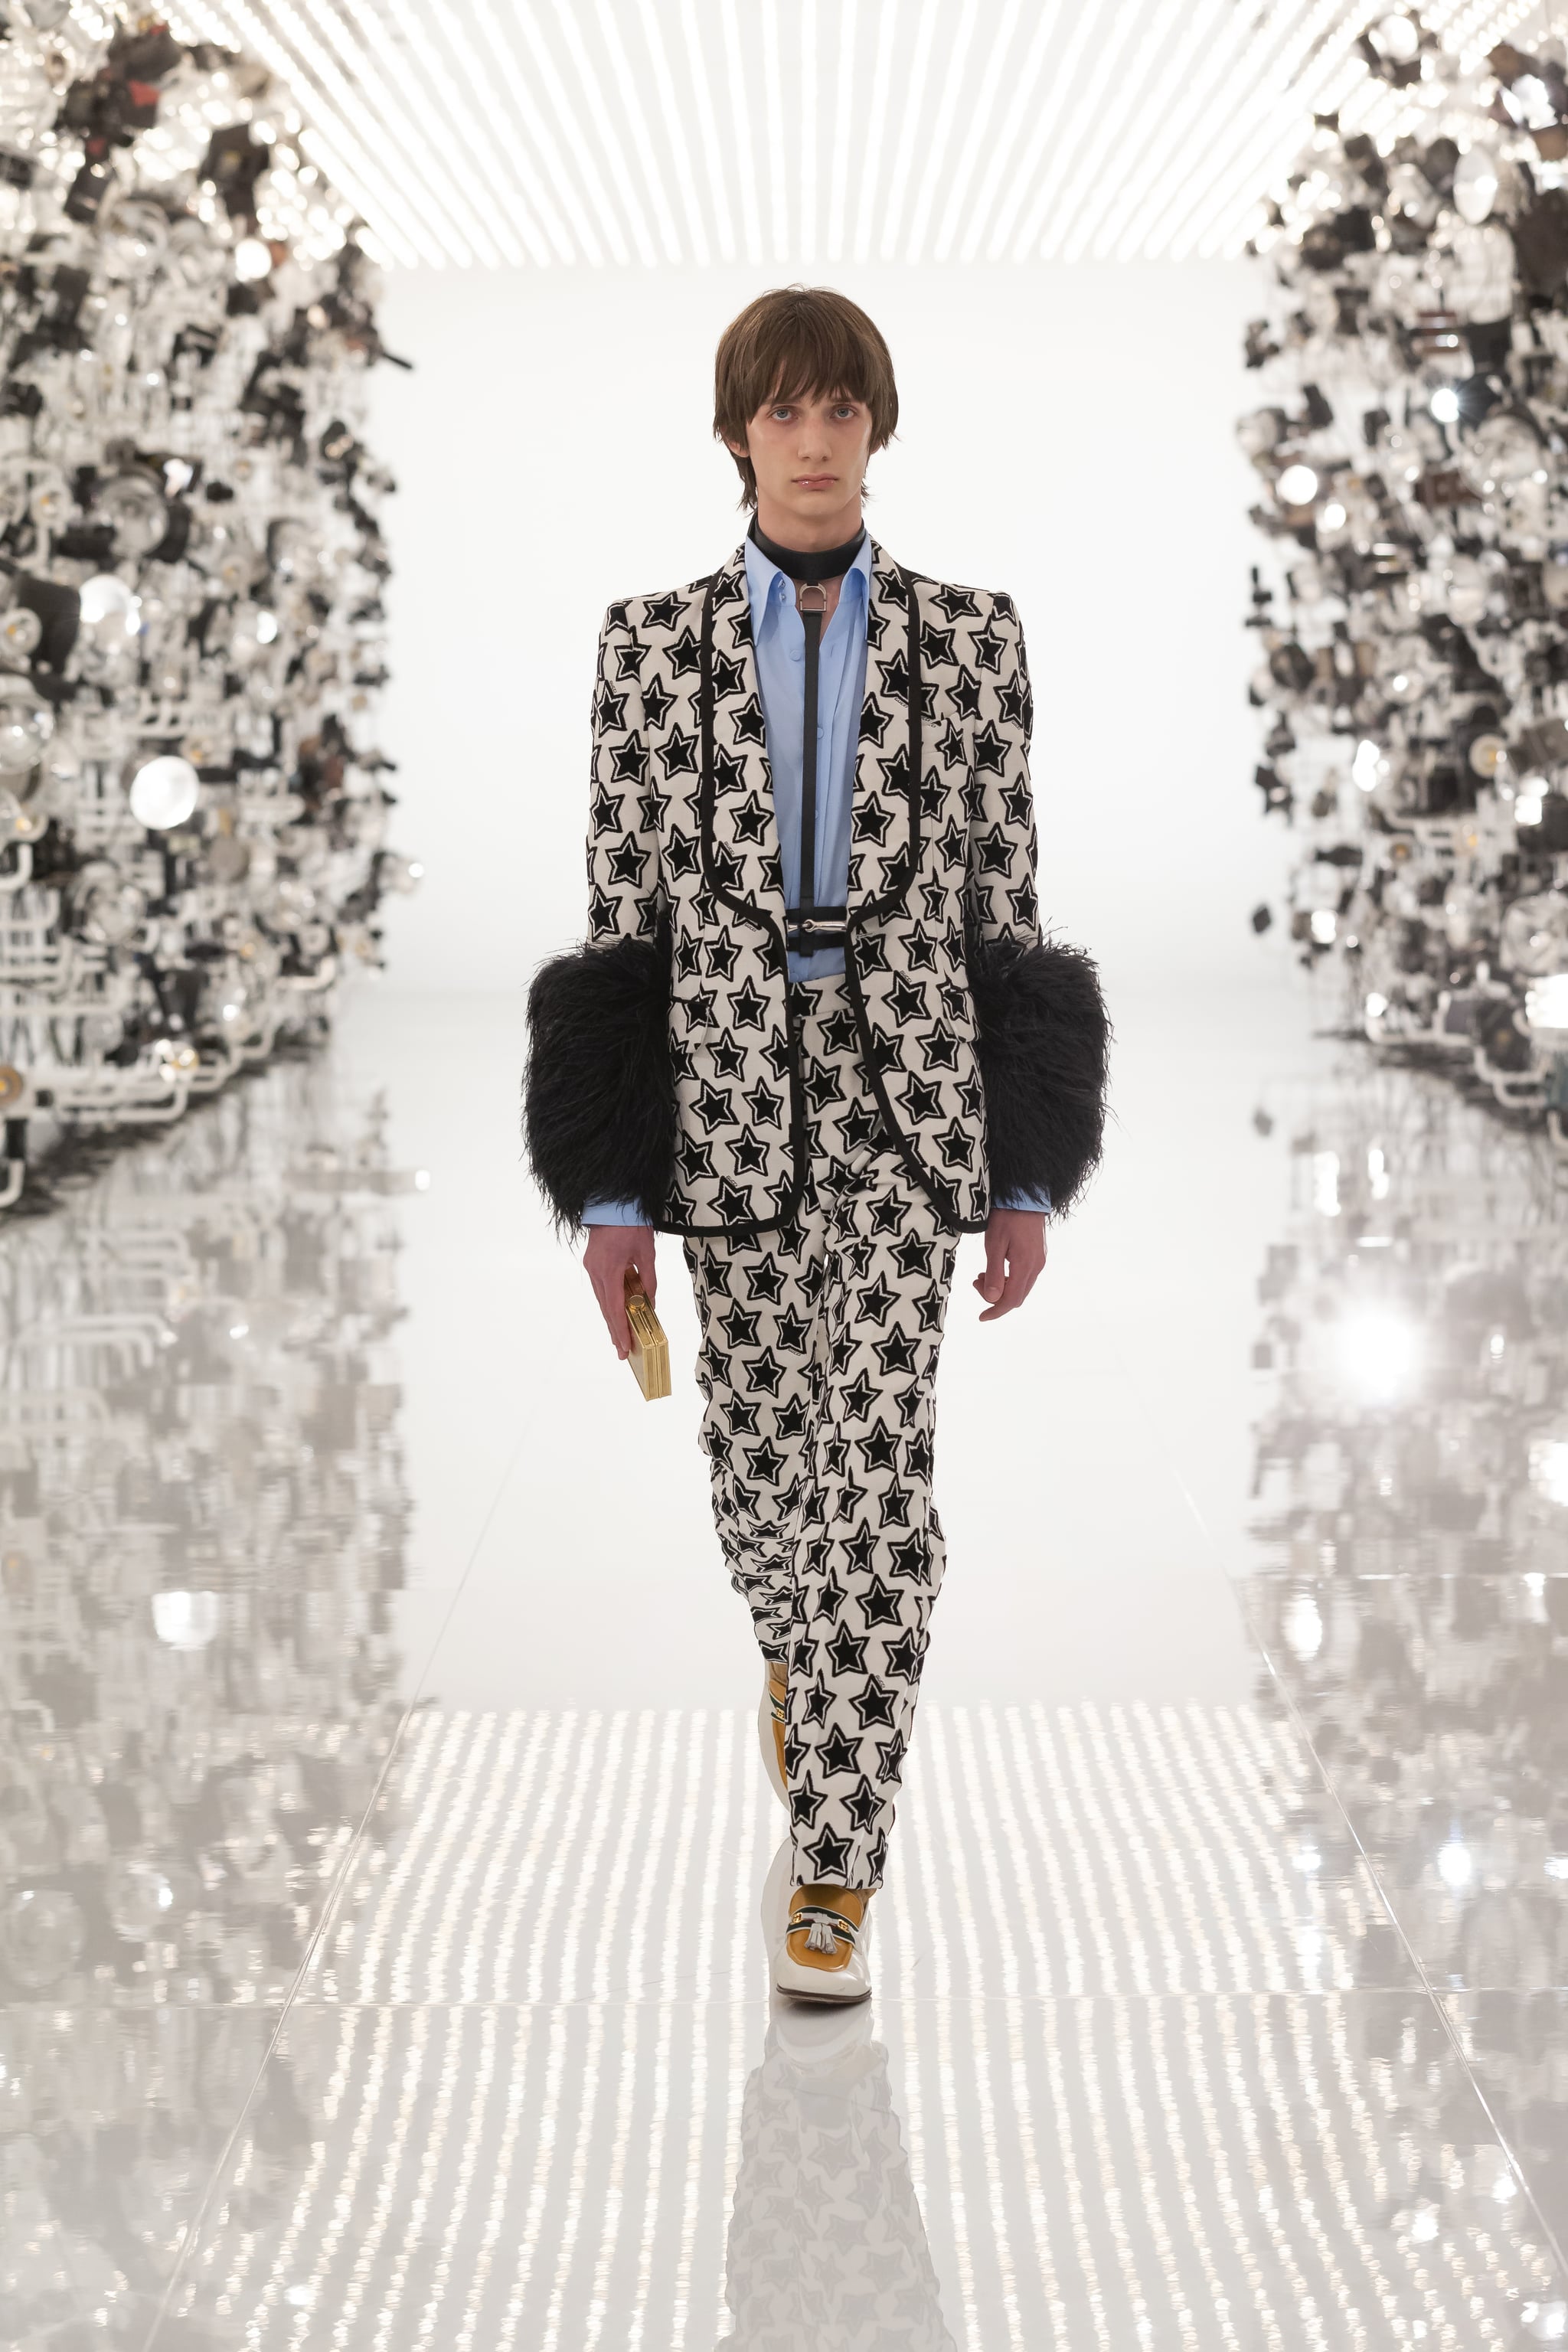 Gucci's Aria Collection Premieres It's Hacking Vision of Balenciaga